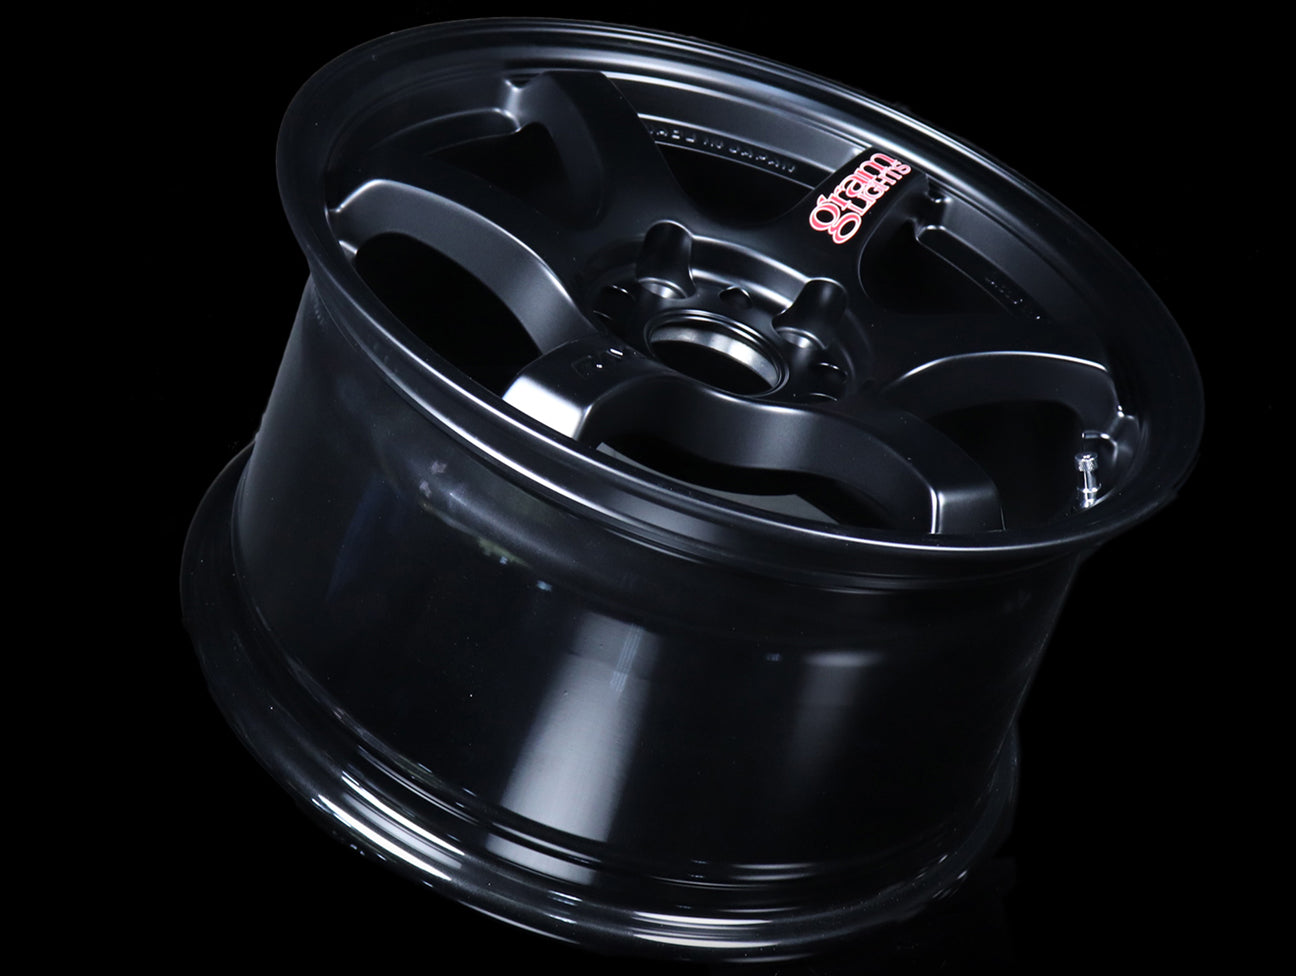 Rays Gram Lights 57DR Wheels - Semi Gloss Black 15x8 / 4x100 / +28